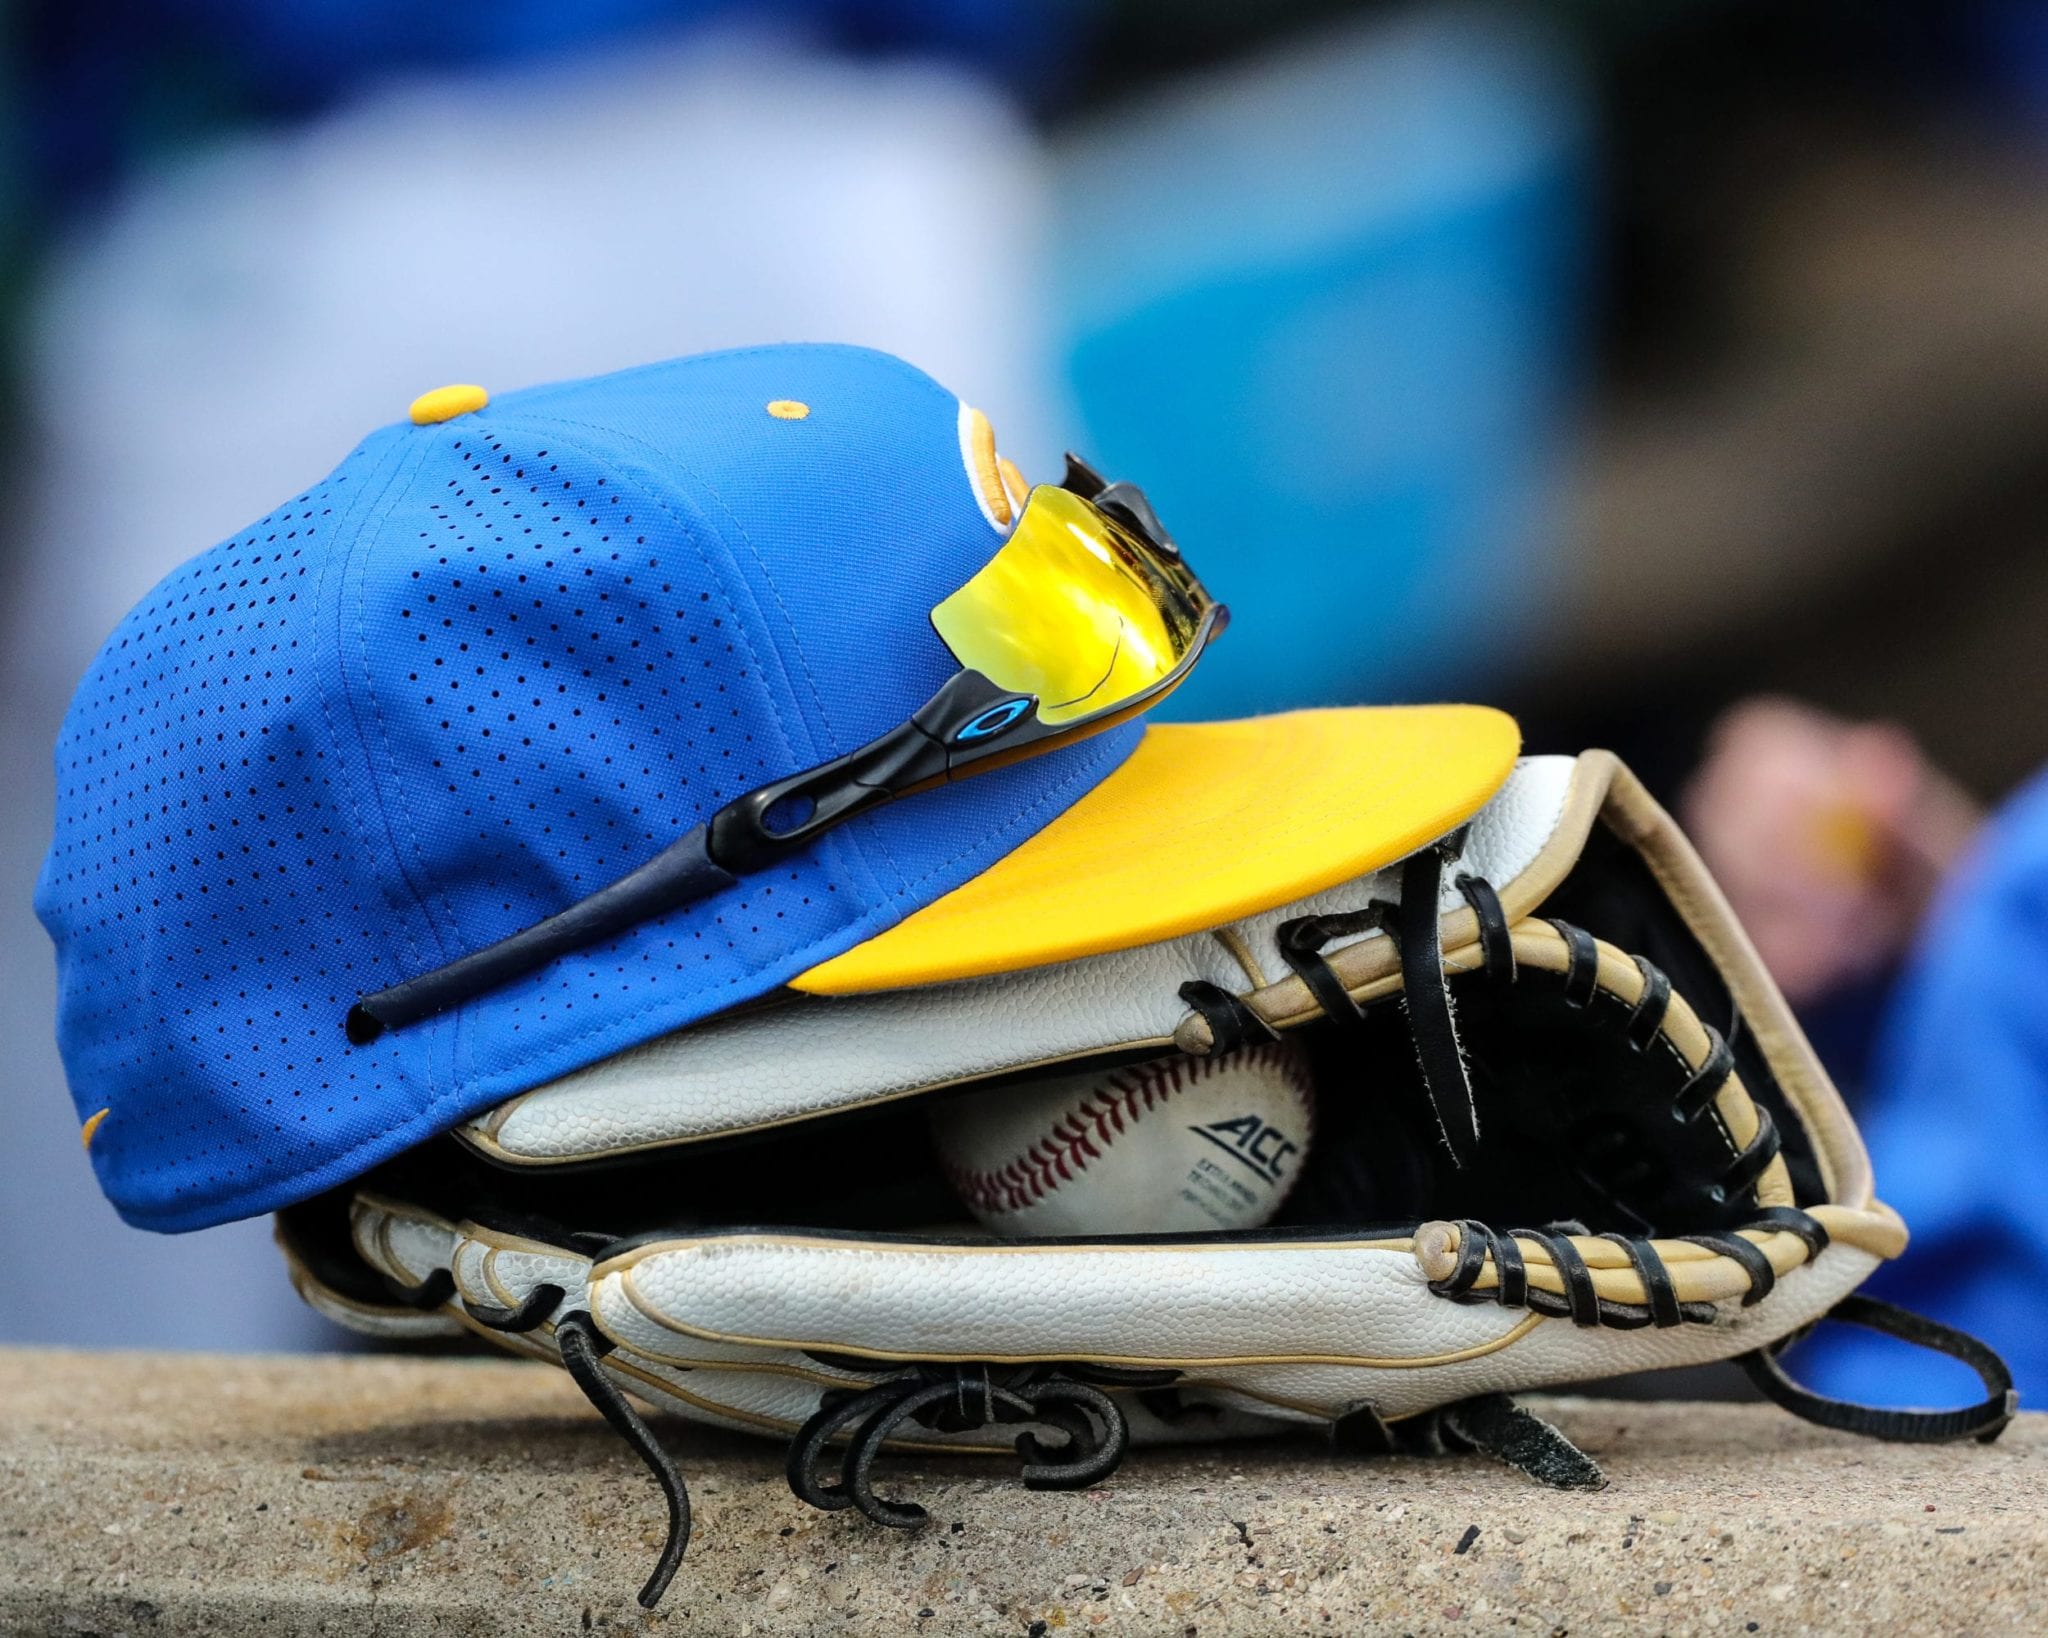 Pitt baseball hat, ball in glove